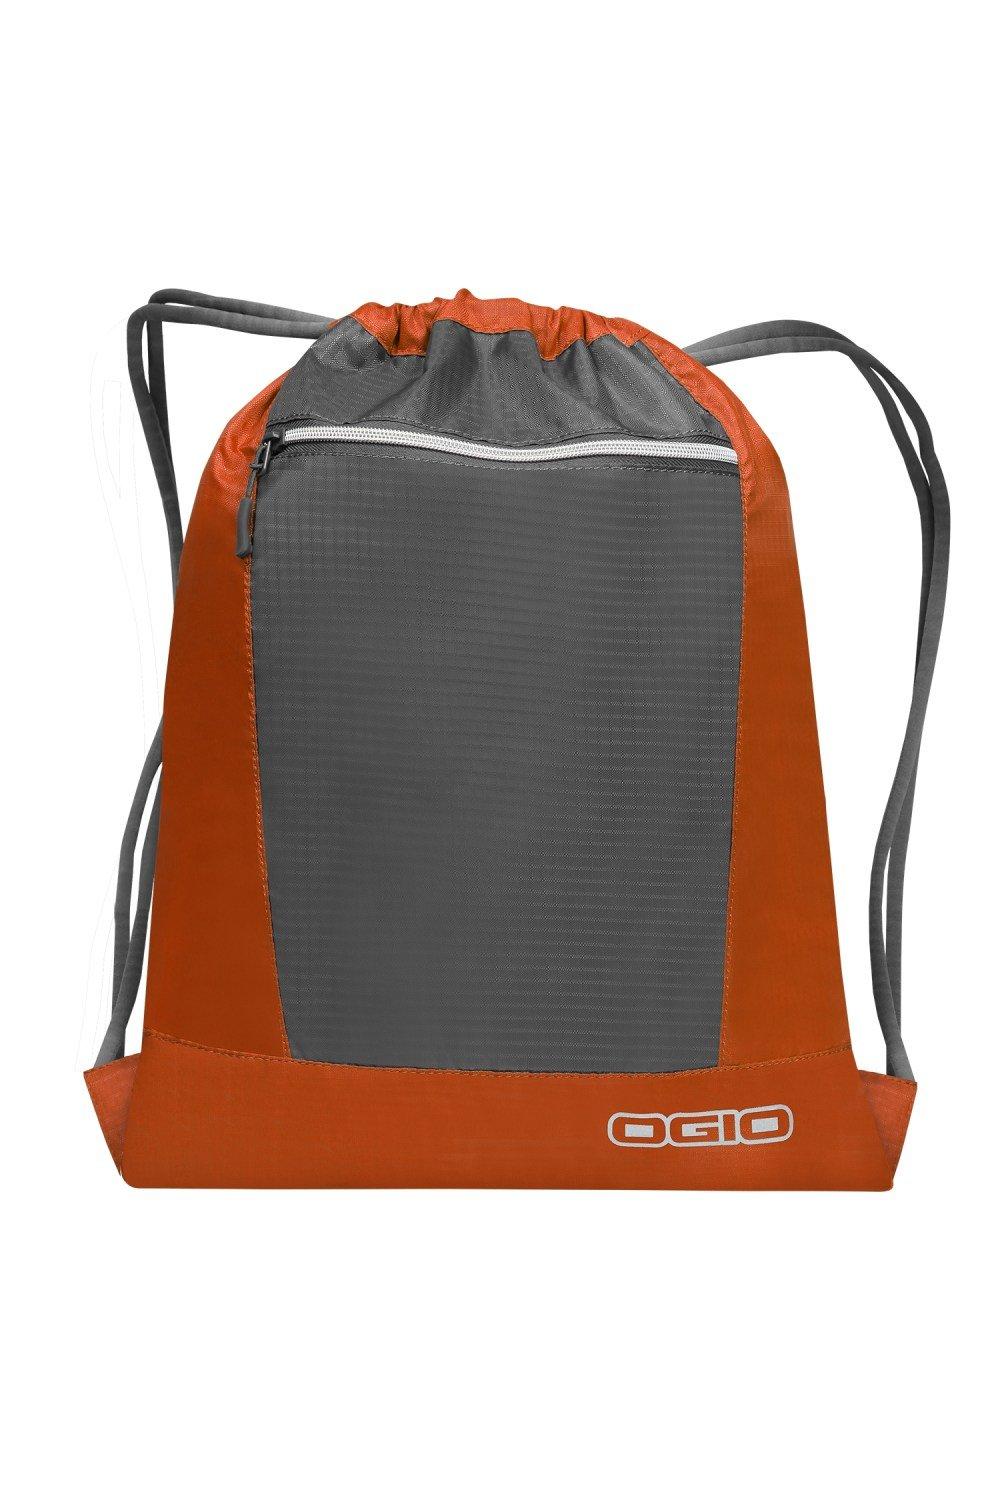 Сумка Endurance Pulse на шнурке (2 шт.) Ogio, оранжевый сумка endurance pulse на шнурке ogio синий